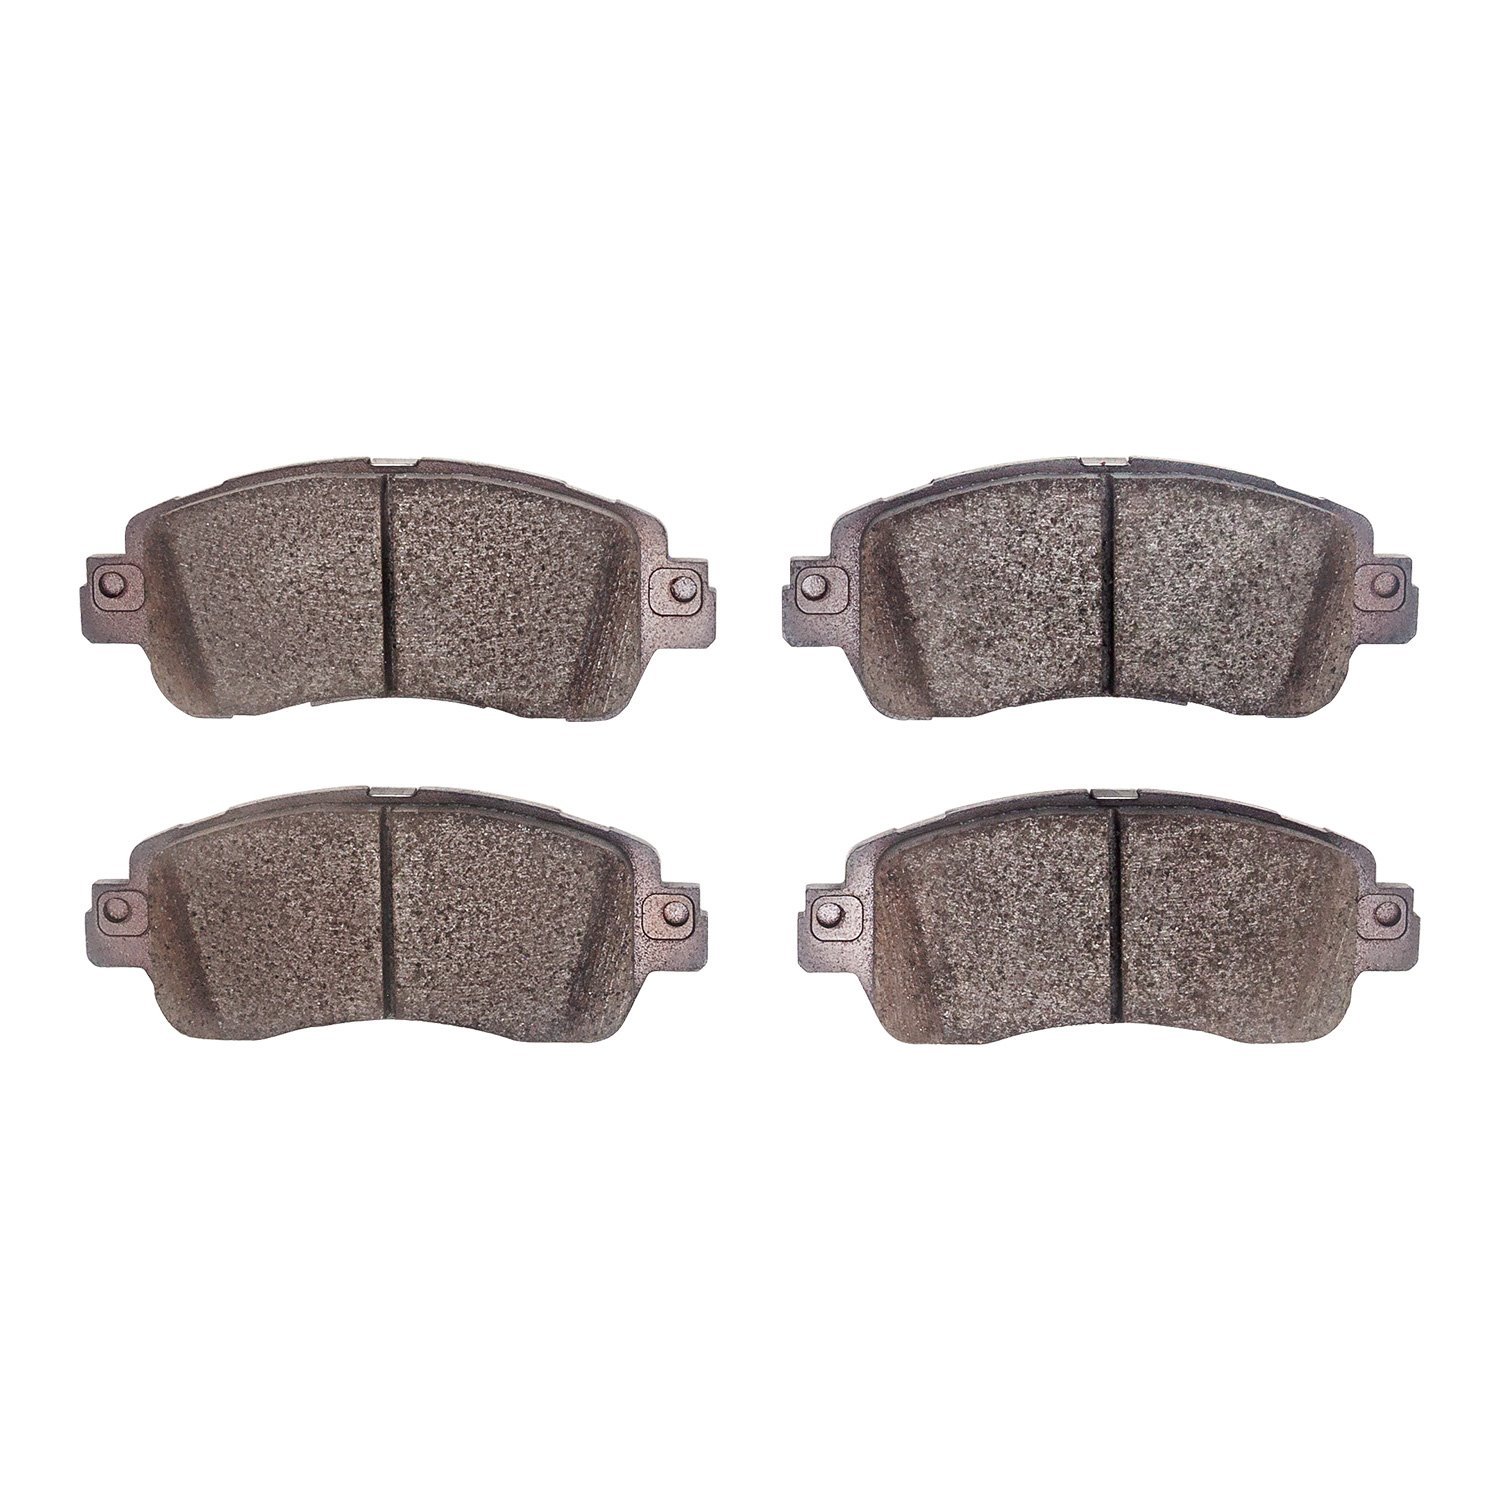 1310-1852-00 3000-Series Ceramic Brake Pads, 2016-2020 Multiple Makes/Models, Position: Front